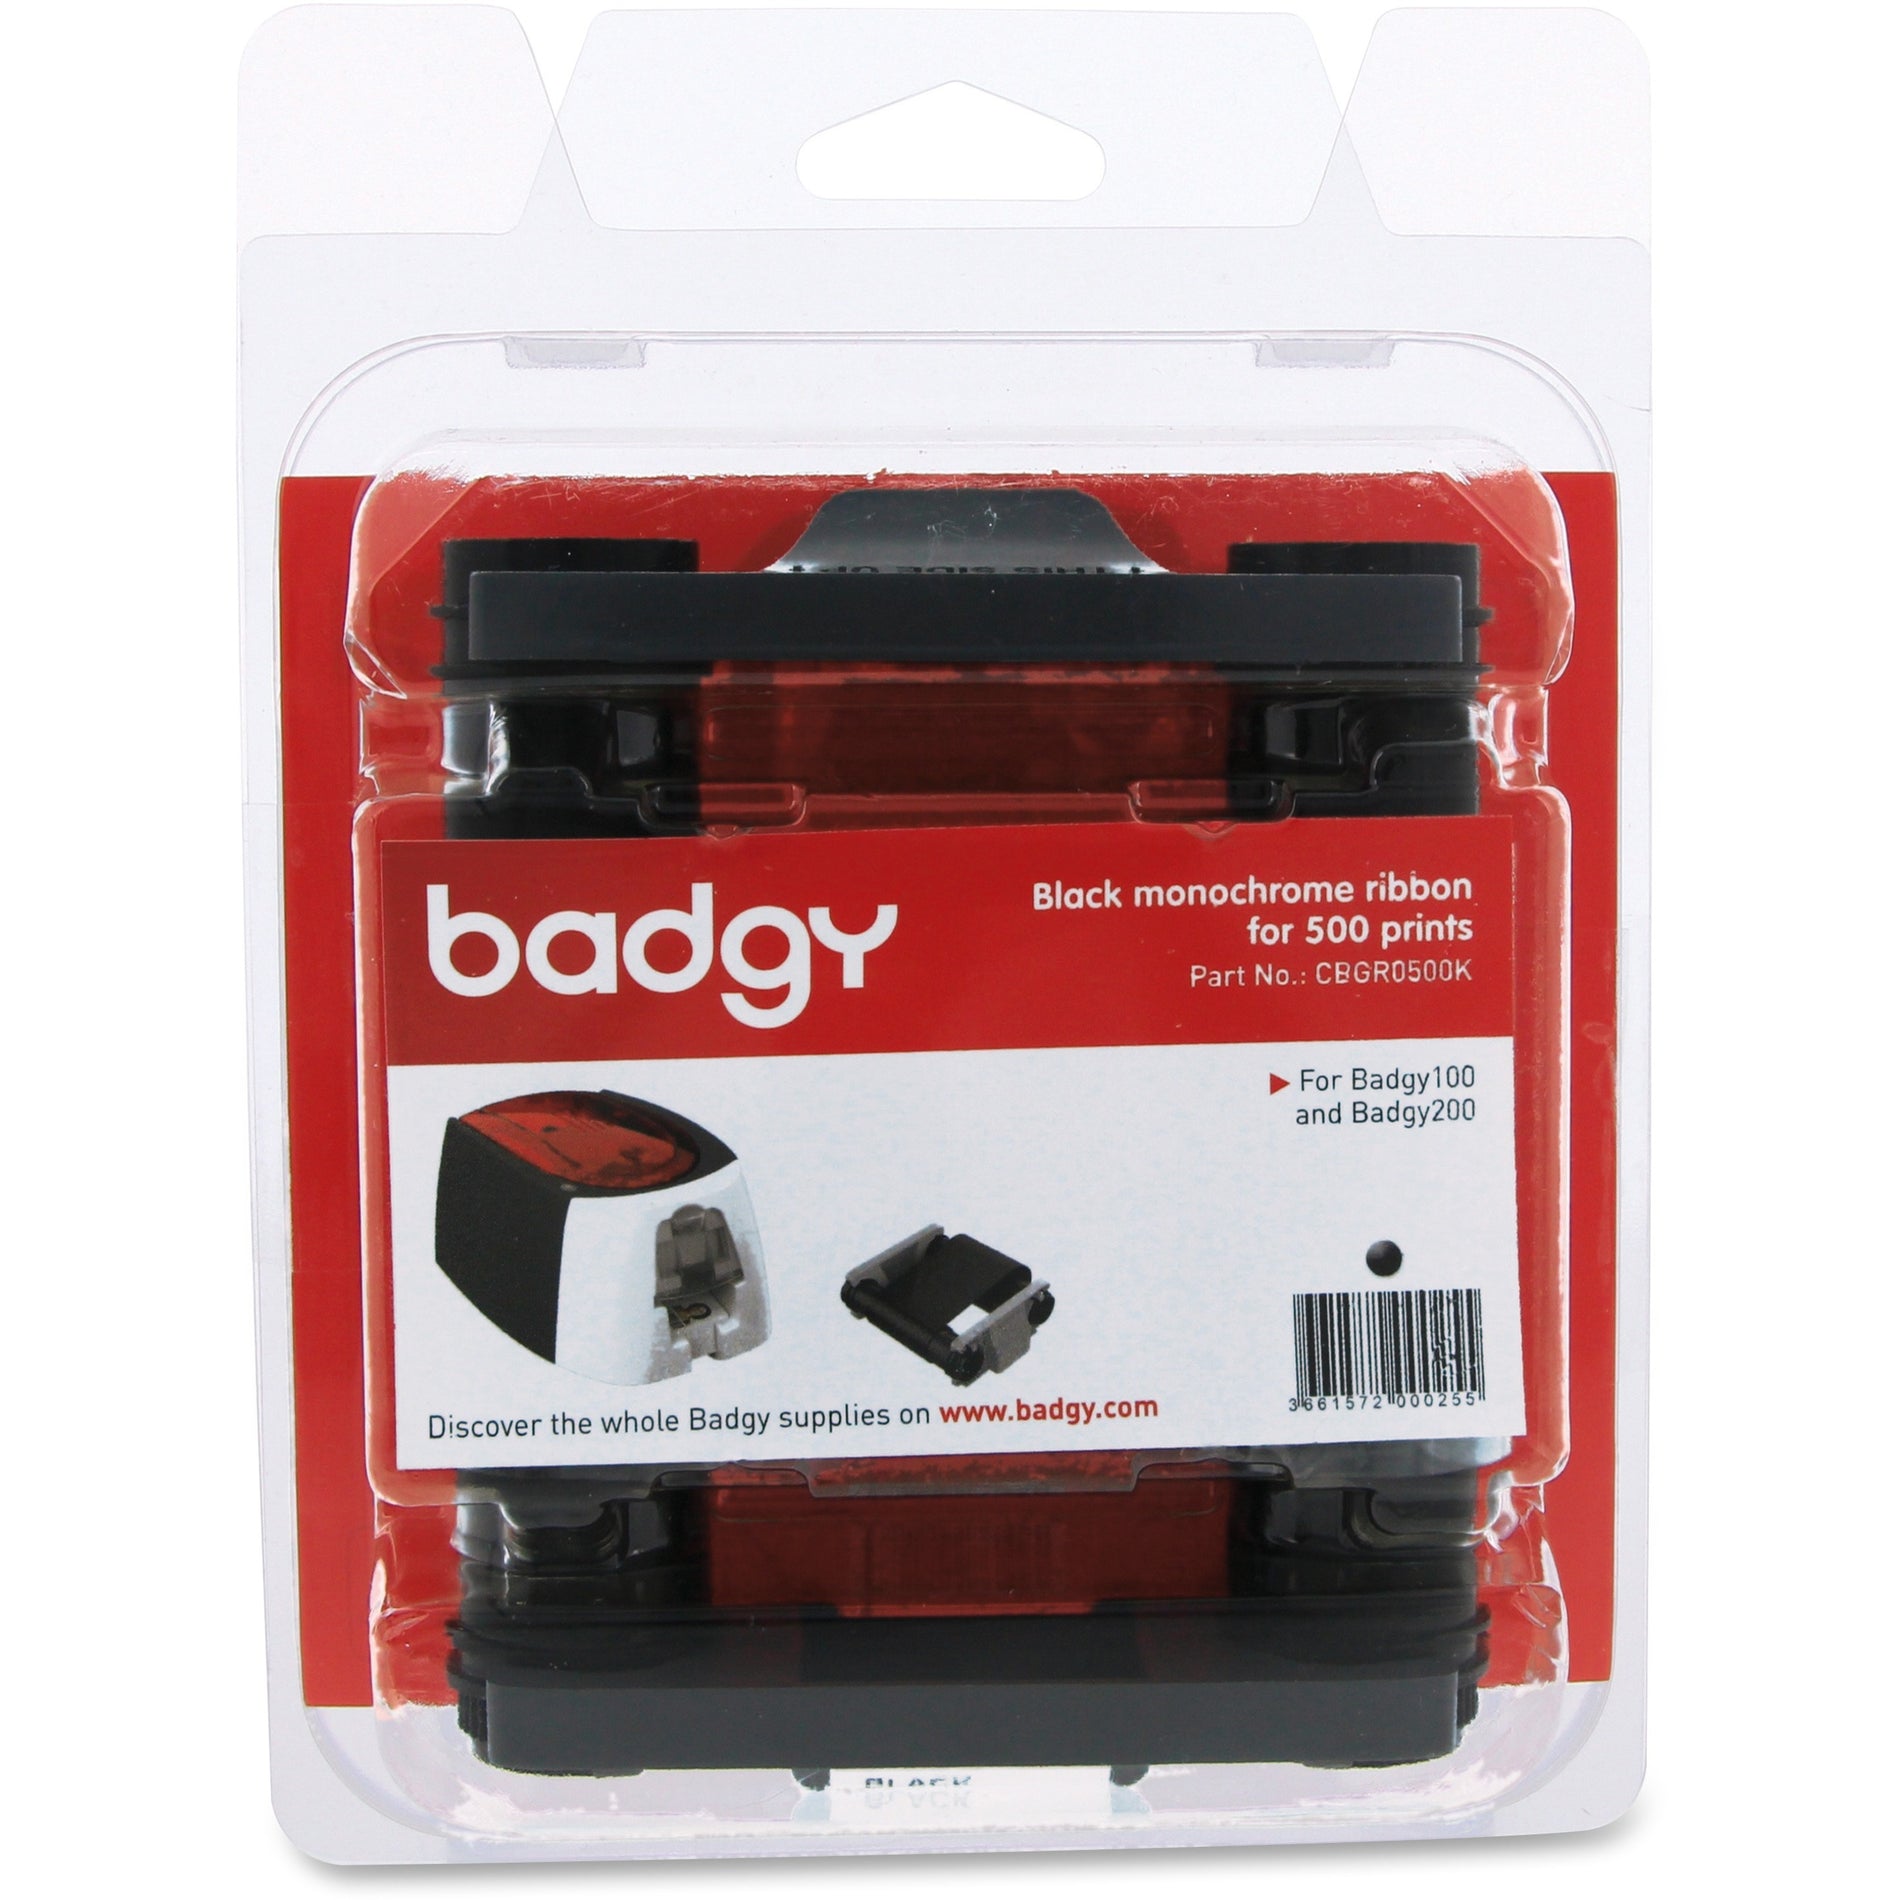 Badgy CBGR0500K Printing System Black Monochrome Ribbon, 500 Page Yield